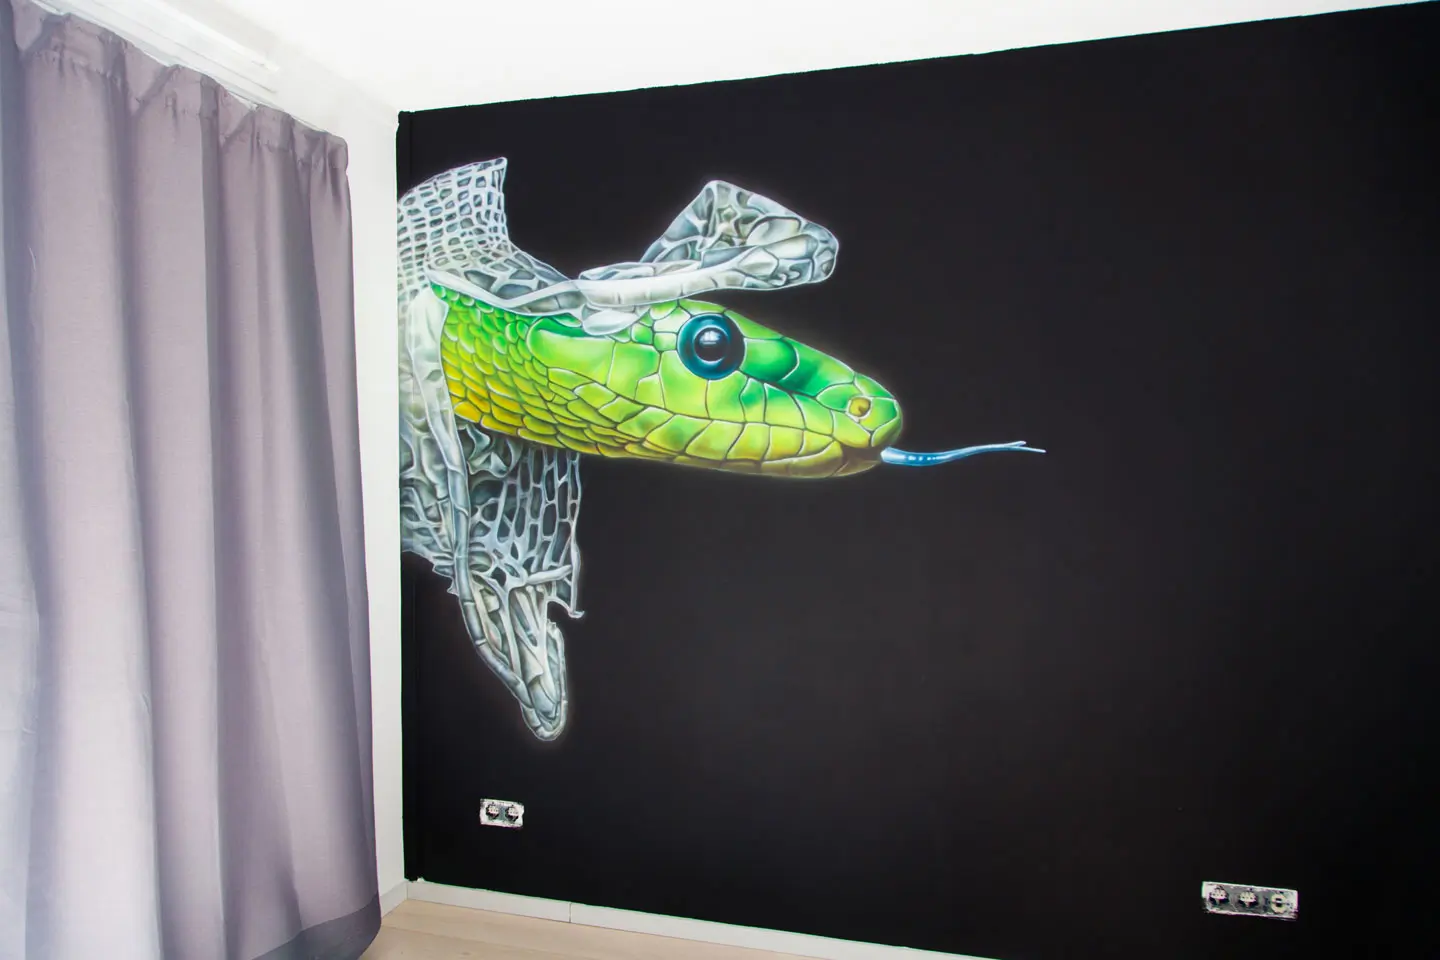 Vervellende slang airbrush muurschildering in tienerkamer